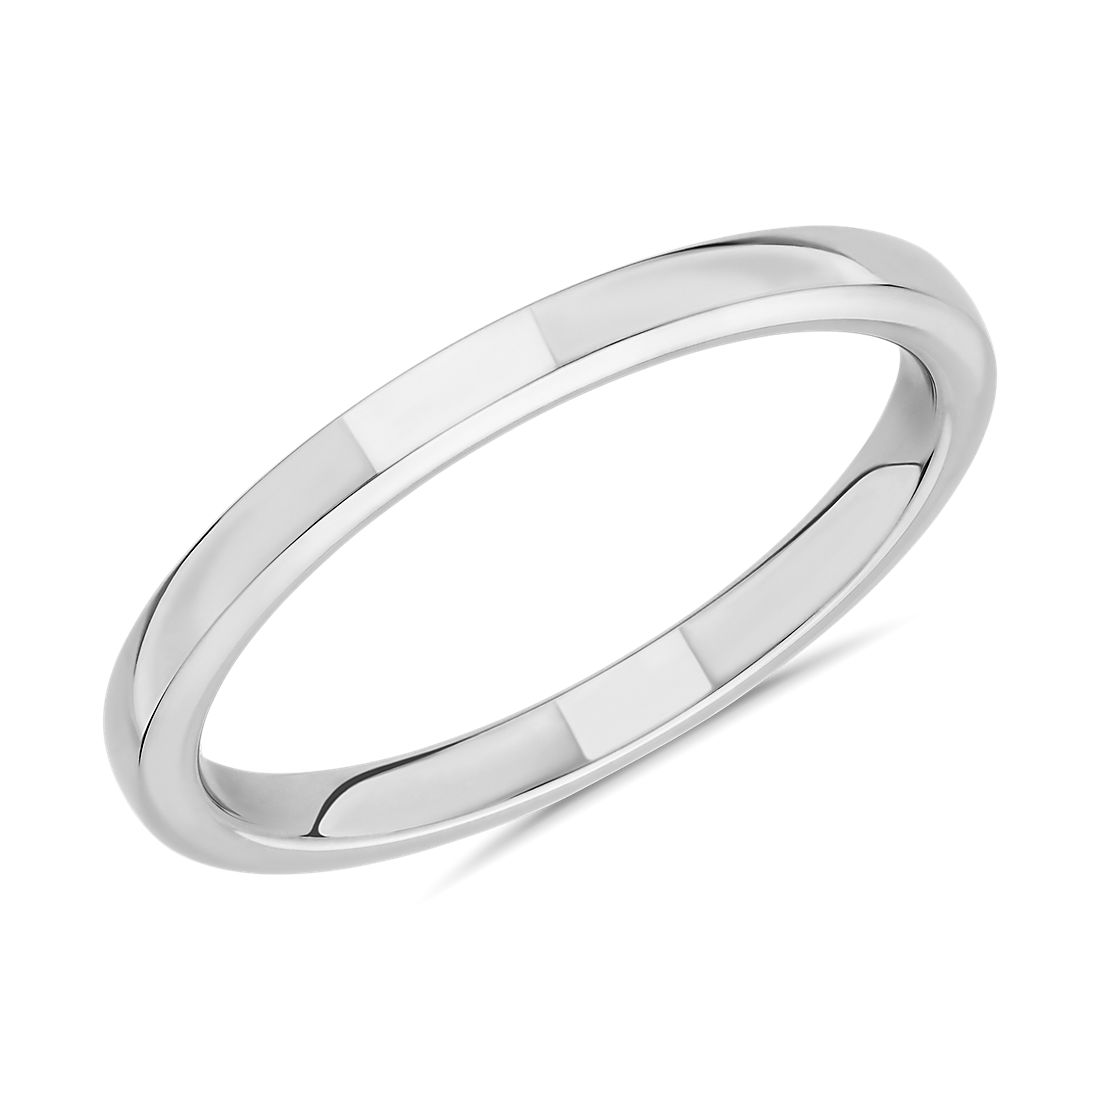 Skyline Comfort Fit Wedding Ring in 18k White Gold (2 mm)